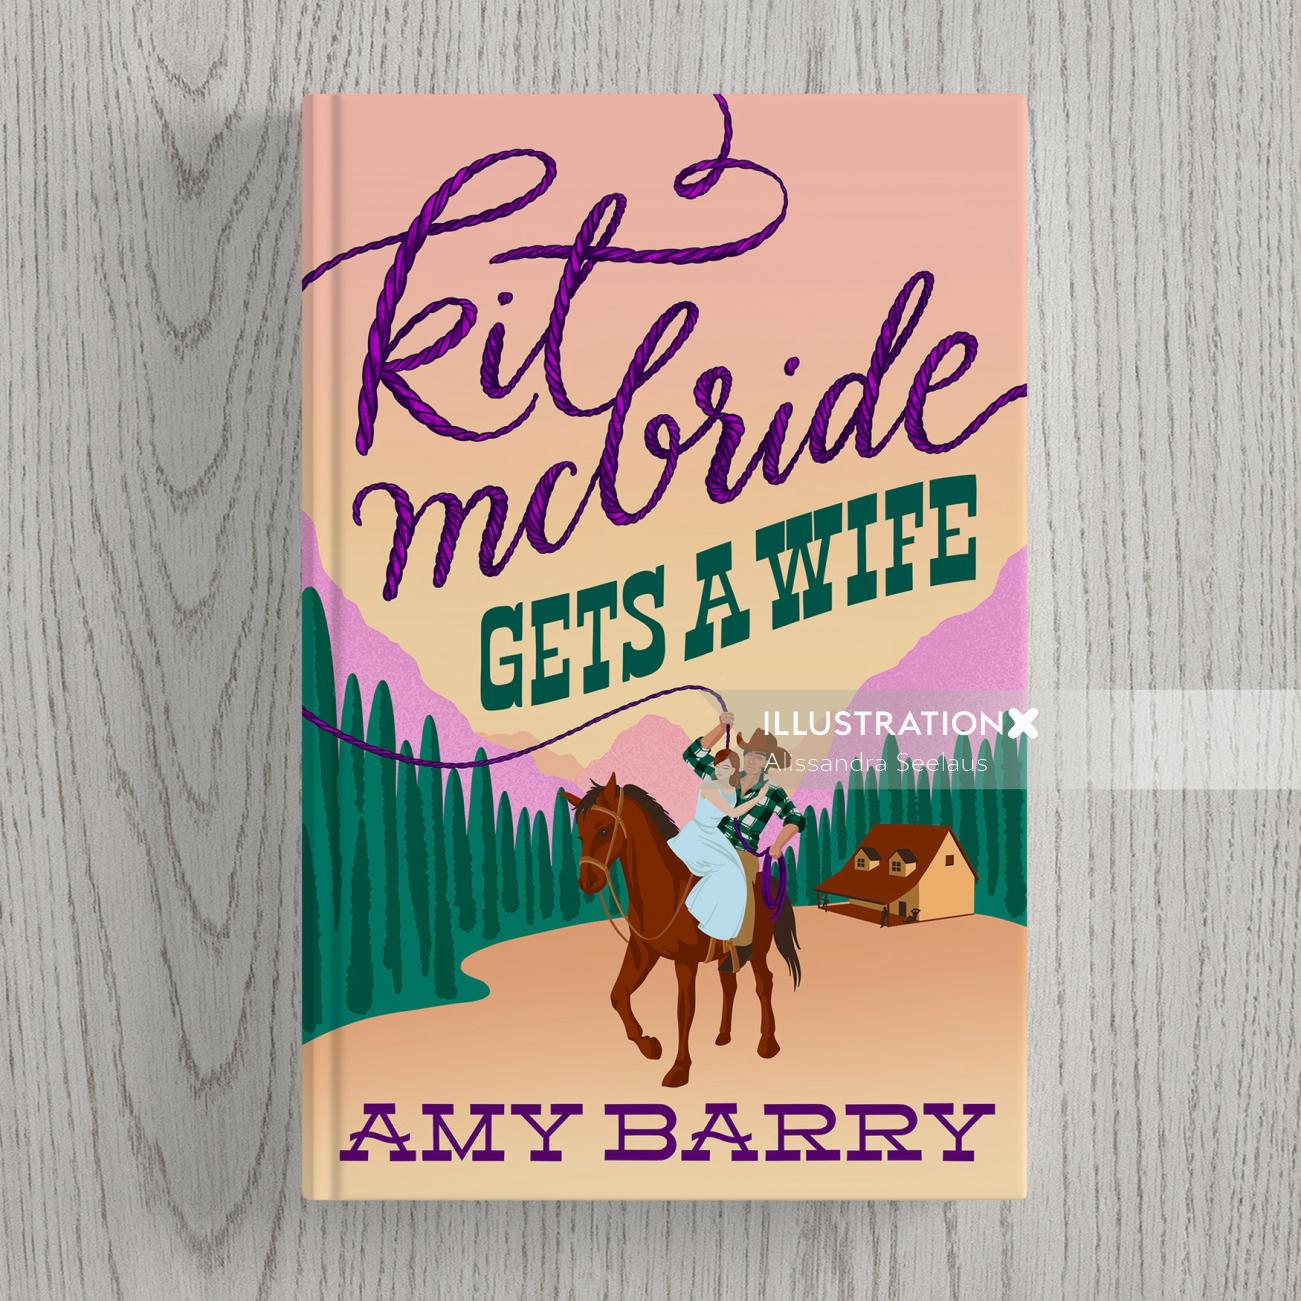 “Kit McBride 娶妻”一书的封面文字